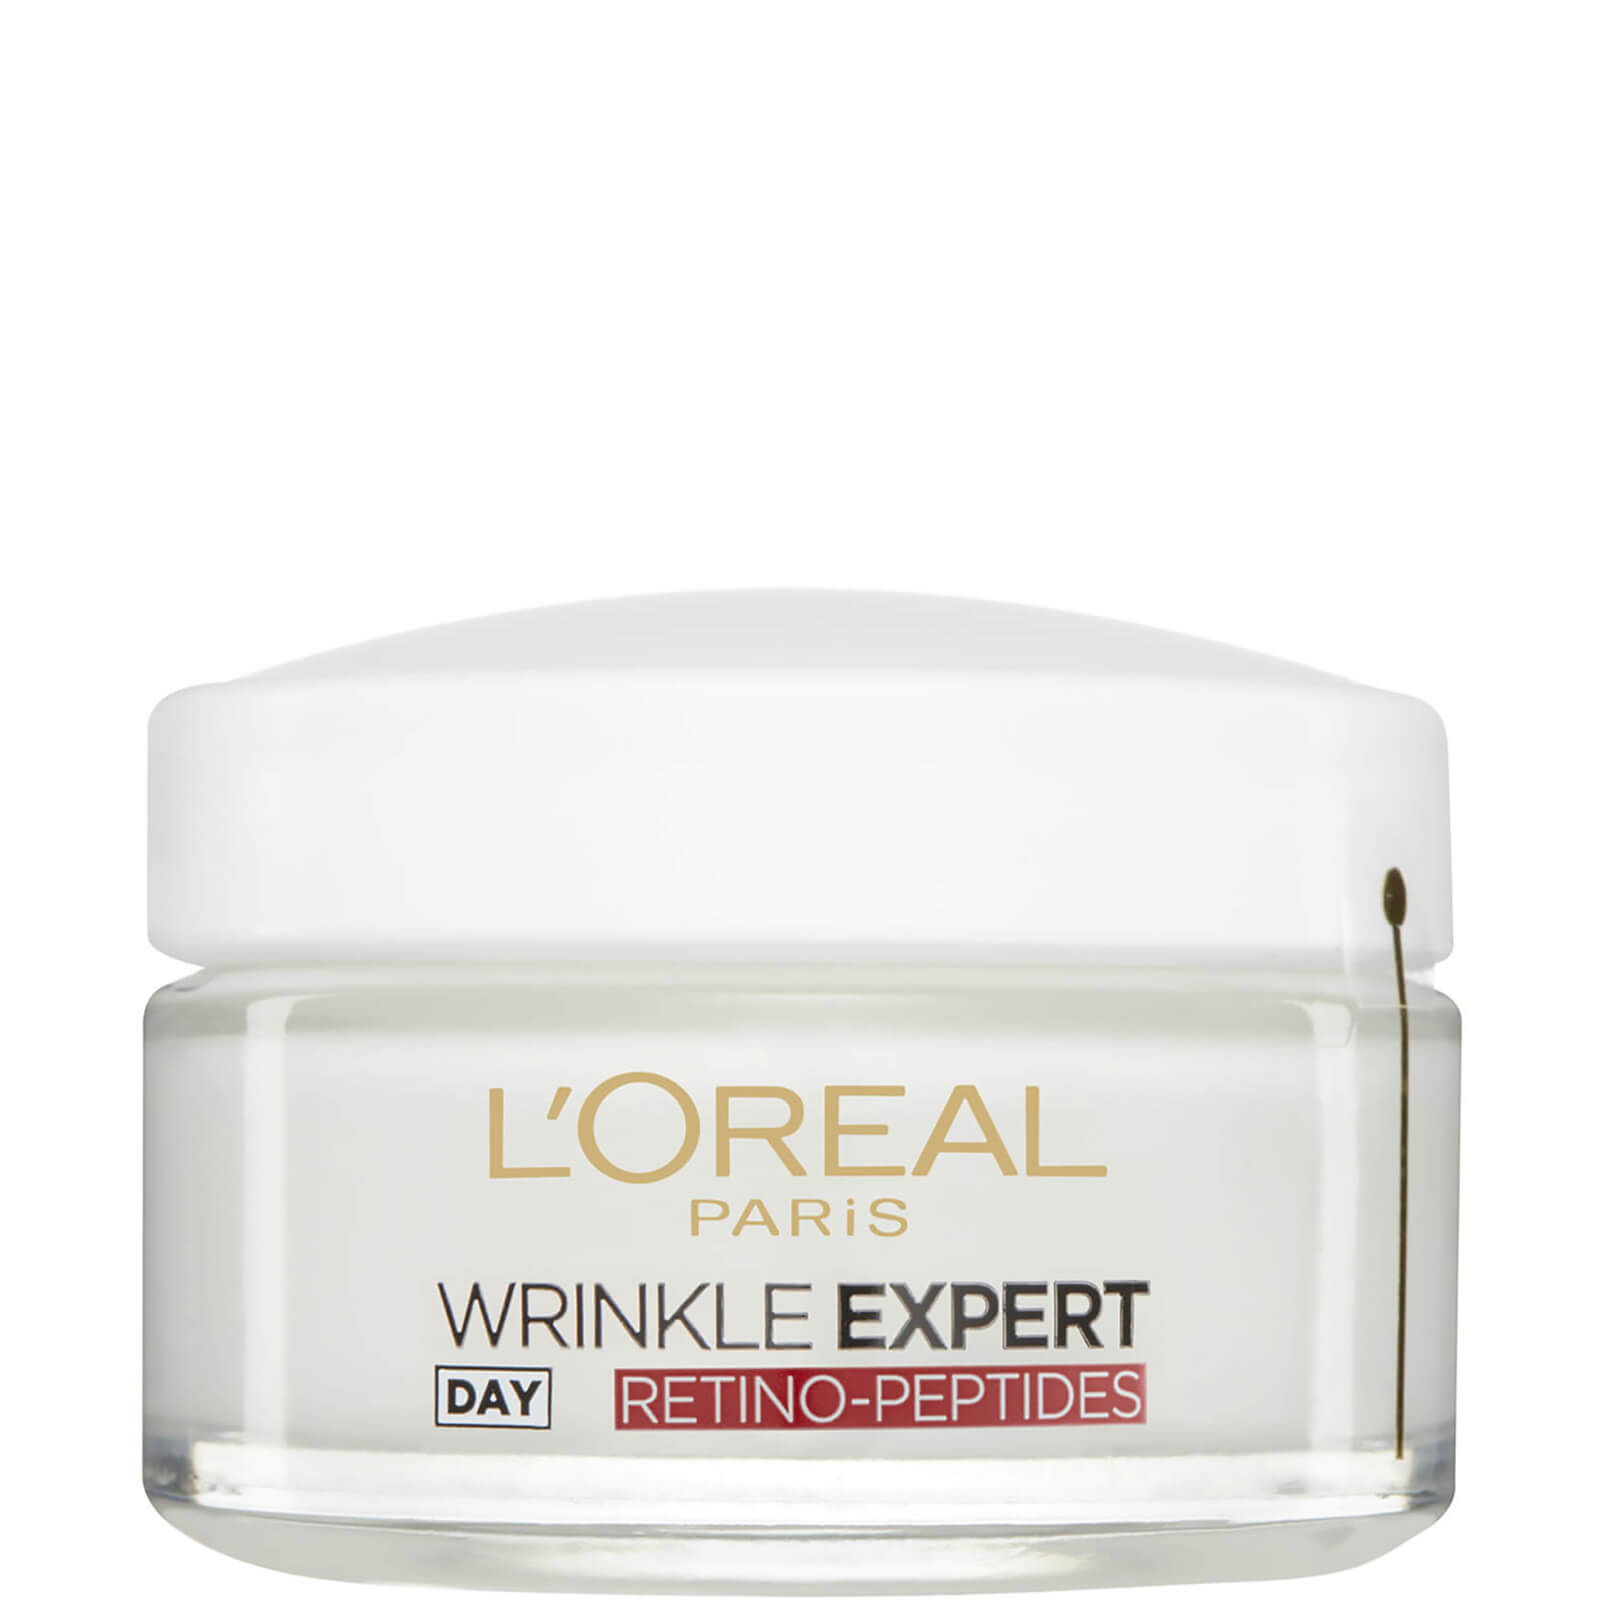 L'Oréal Paris Wrinkle Expert 45+ Retino-Peptides Day 50ml